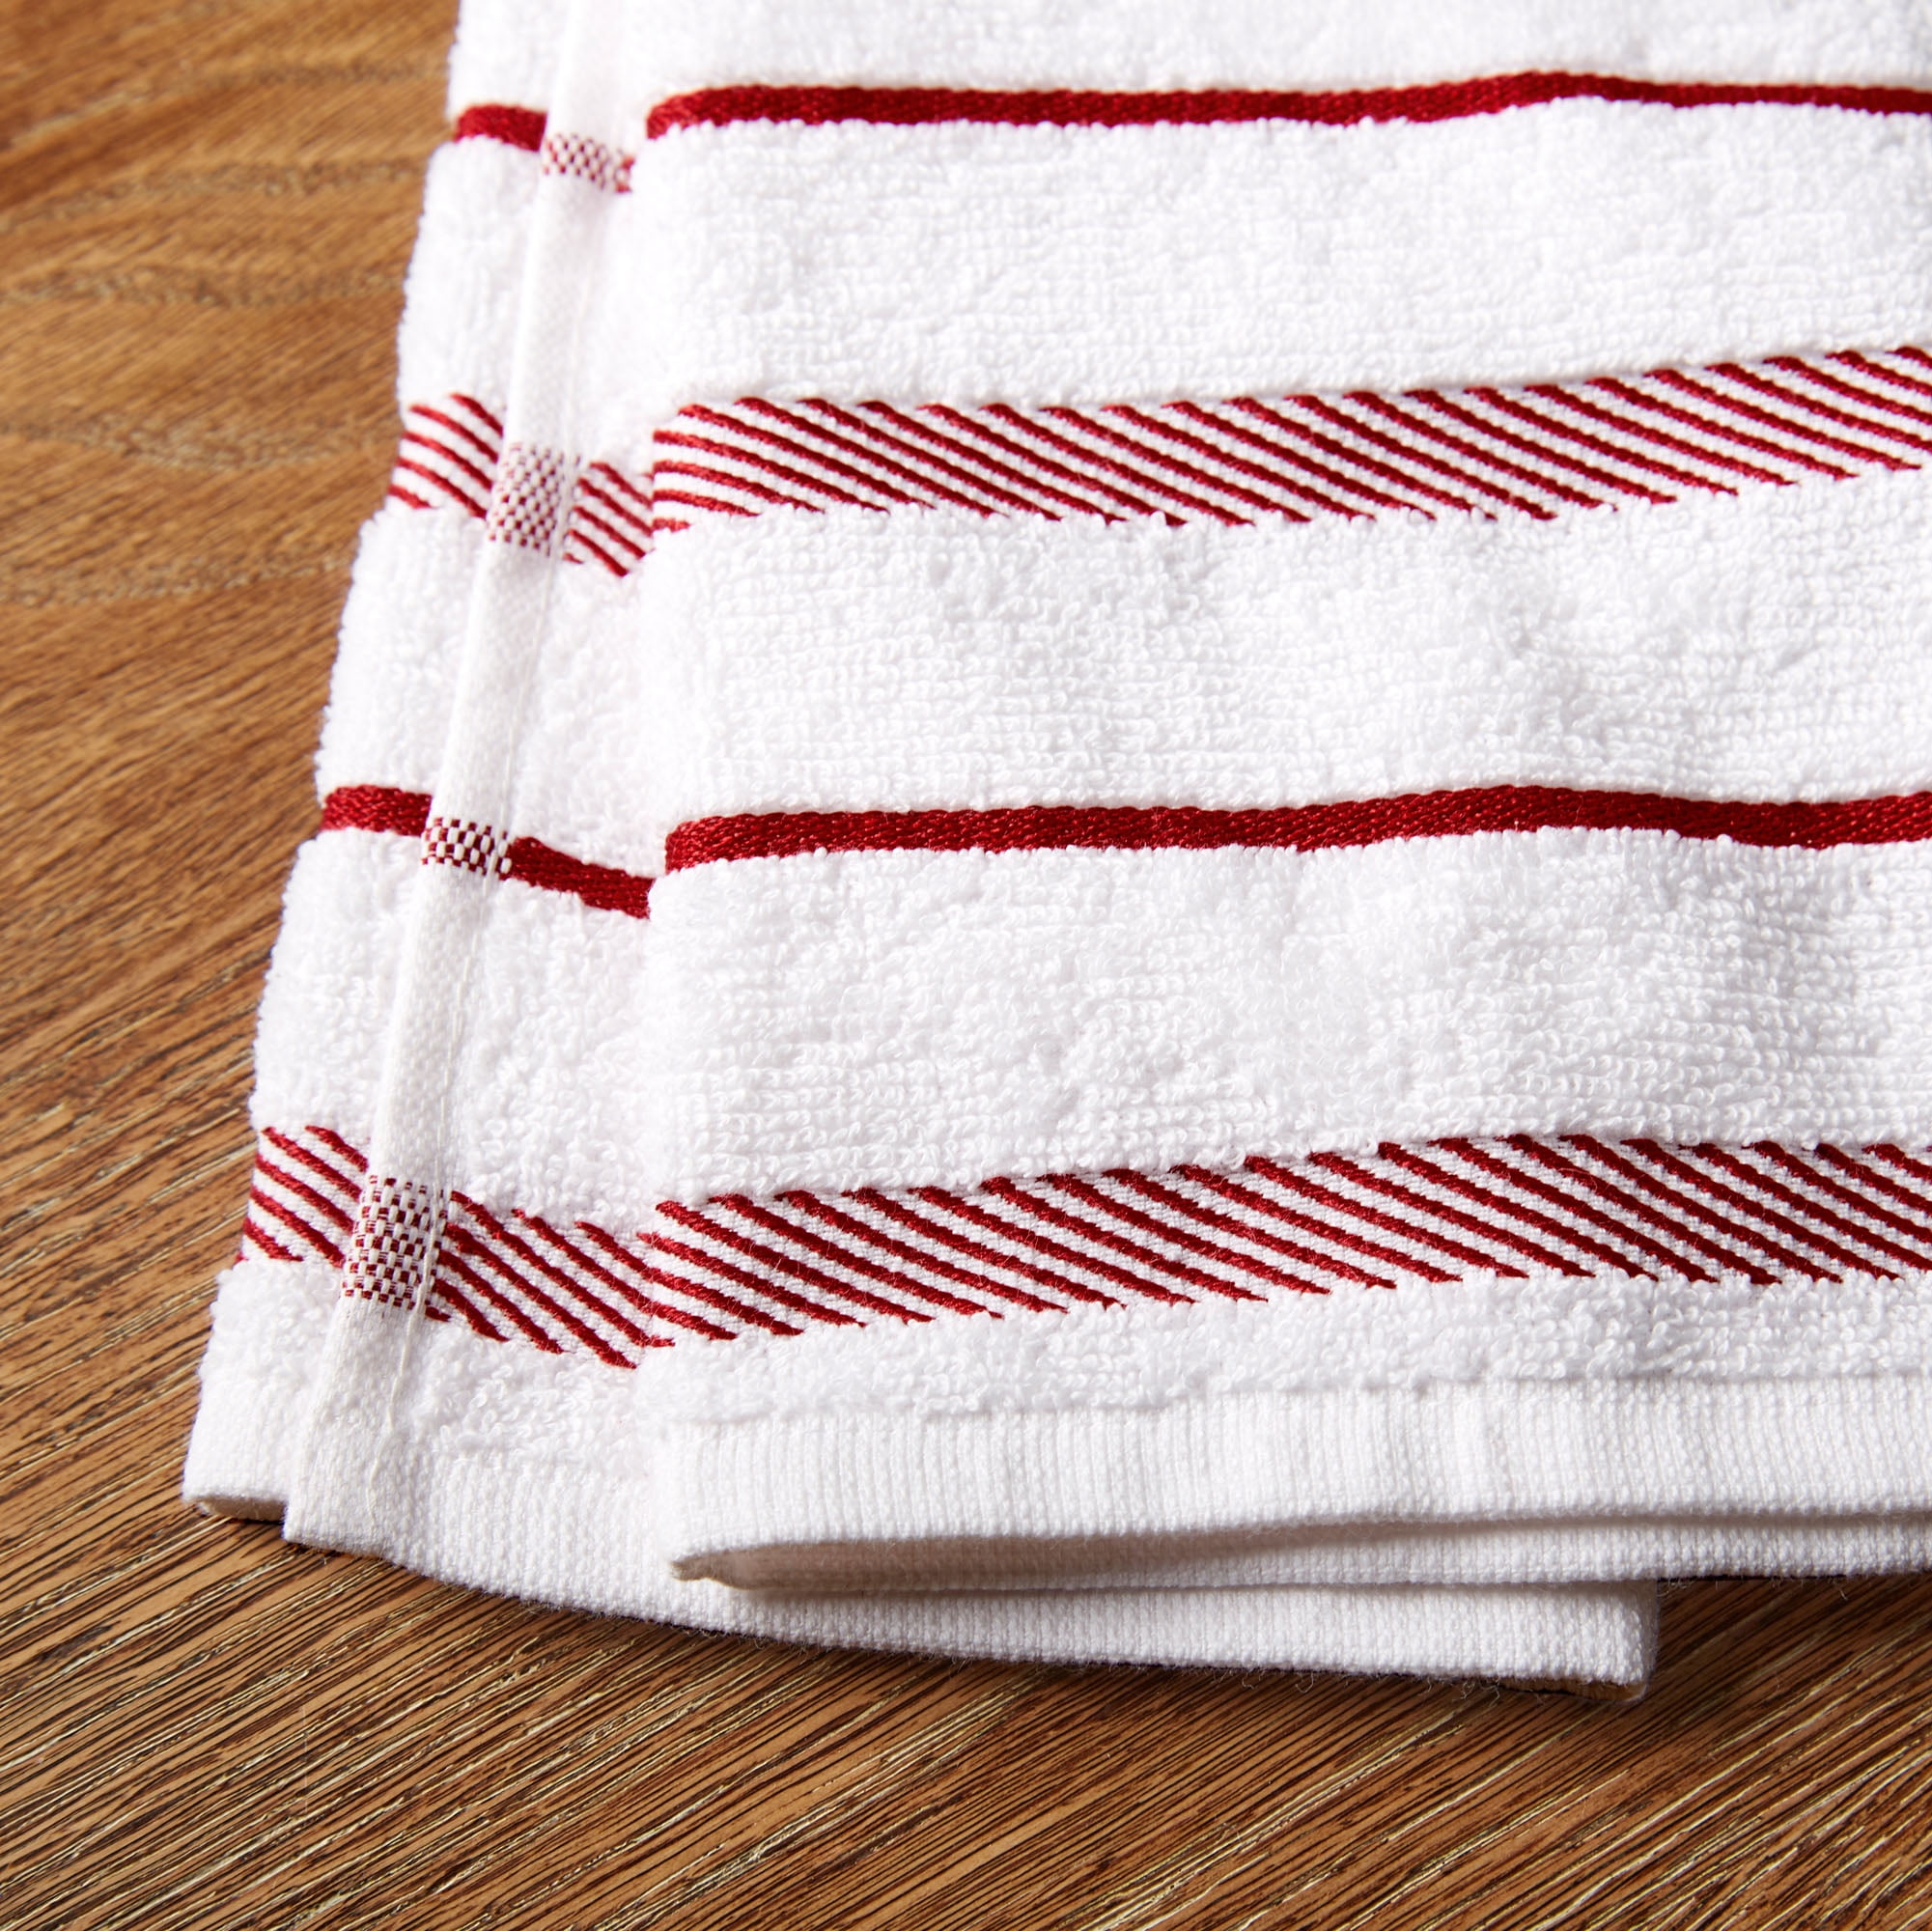 KITCHEN AID KITCHEN TOWELS (2) RED WHITE BLOCKS 100% COTTON NIP